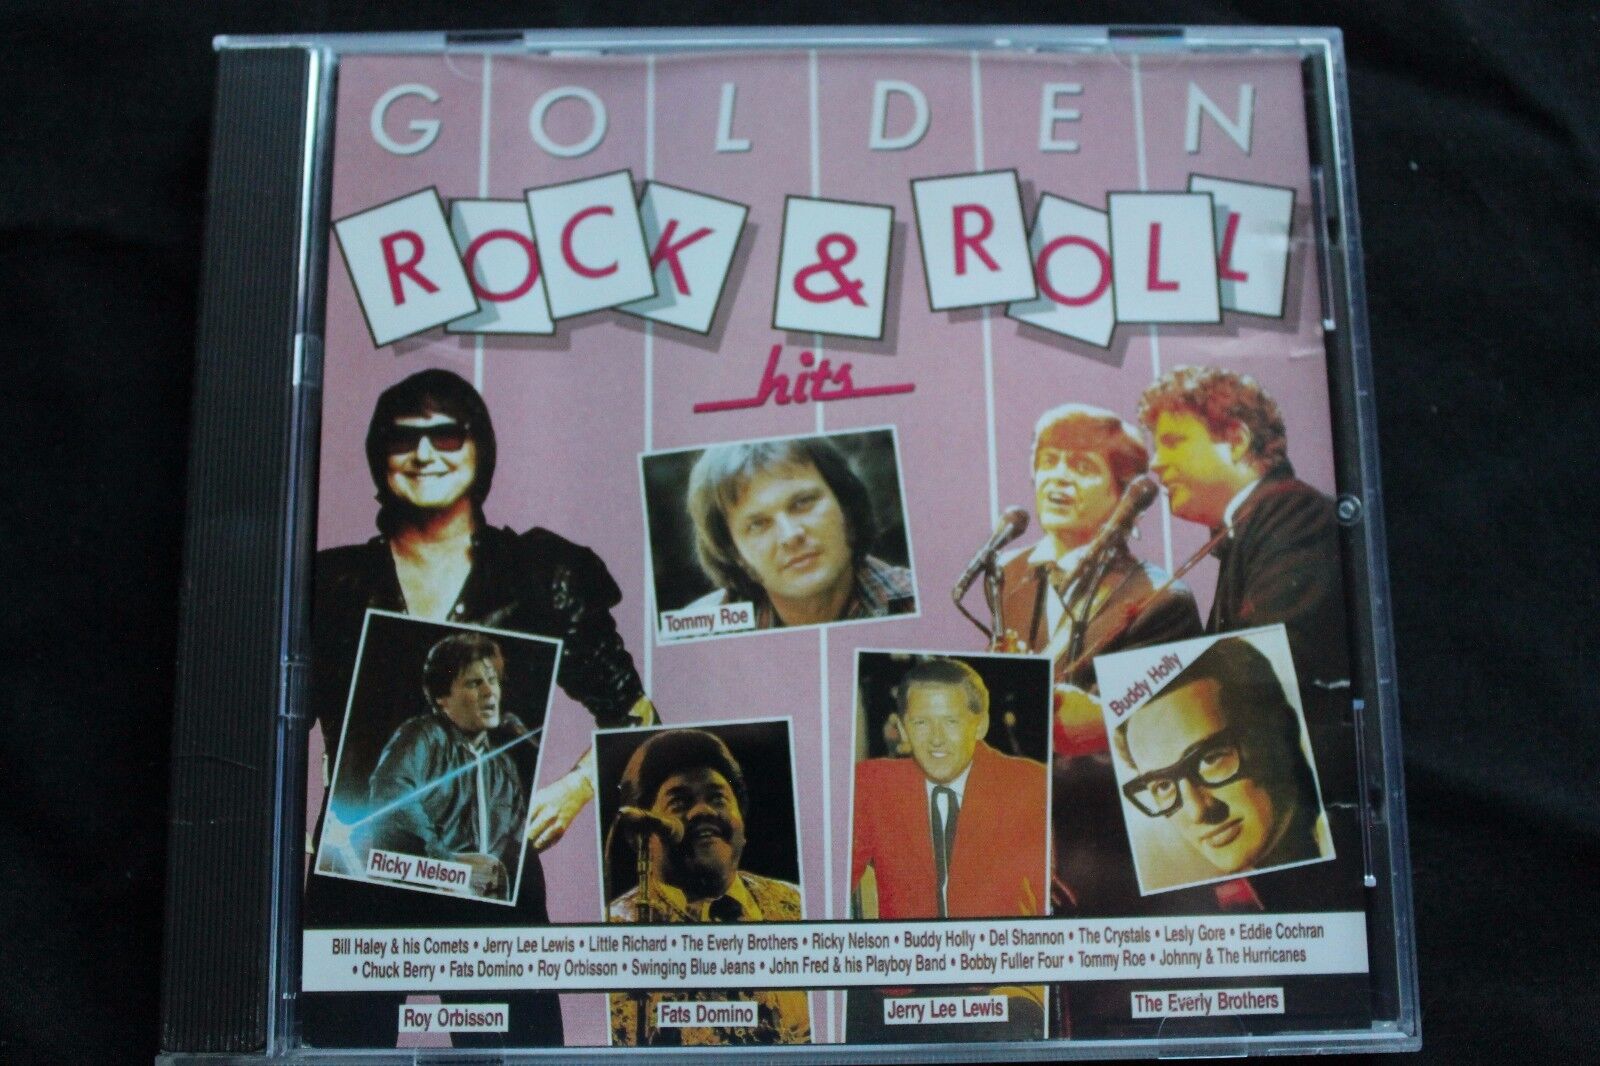 Golden Rock & Roll Hits - Various Artists (REF C27)